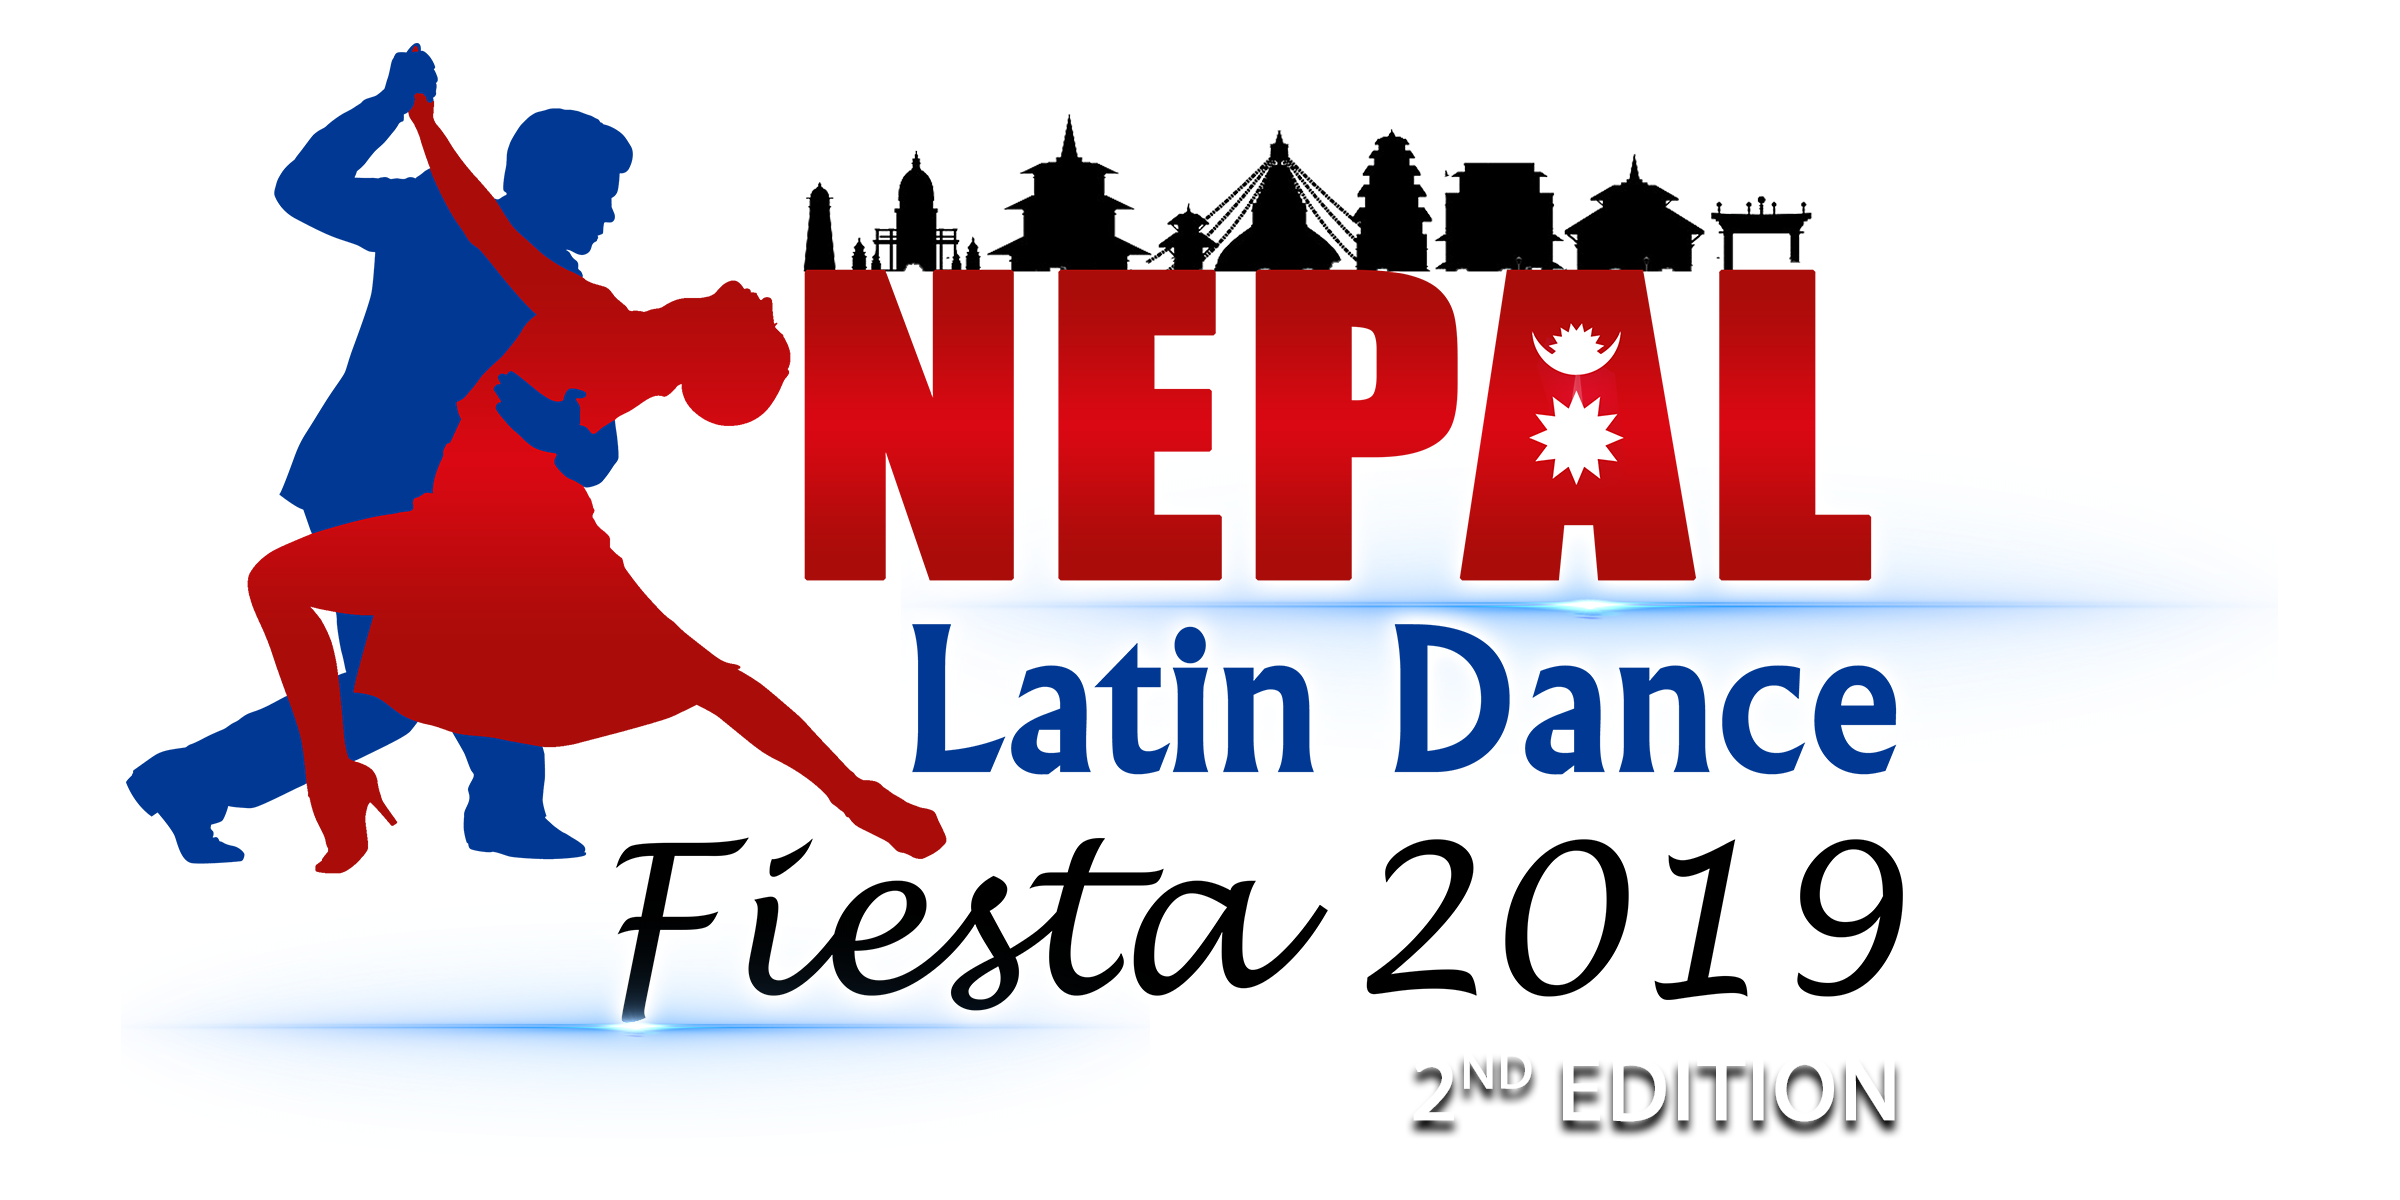 Nepal Latin Dance Fiesta 2019 to kick off